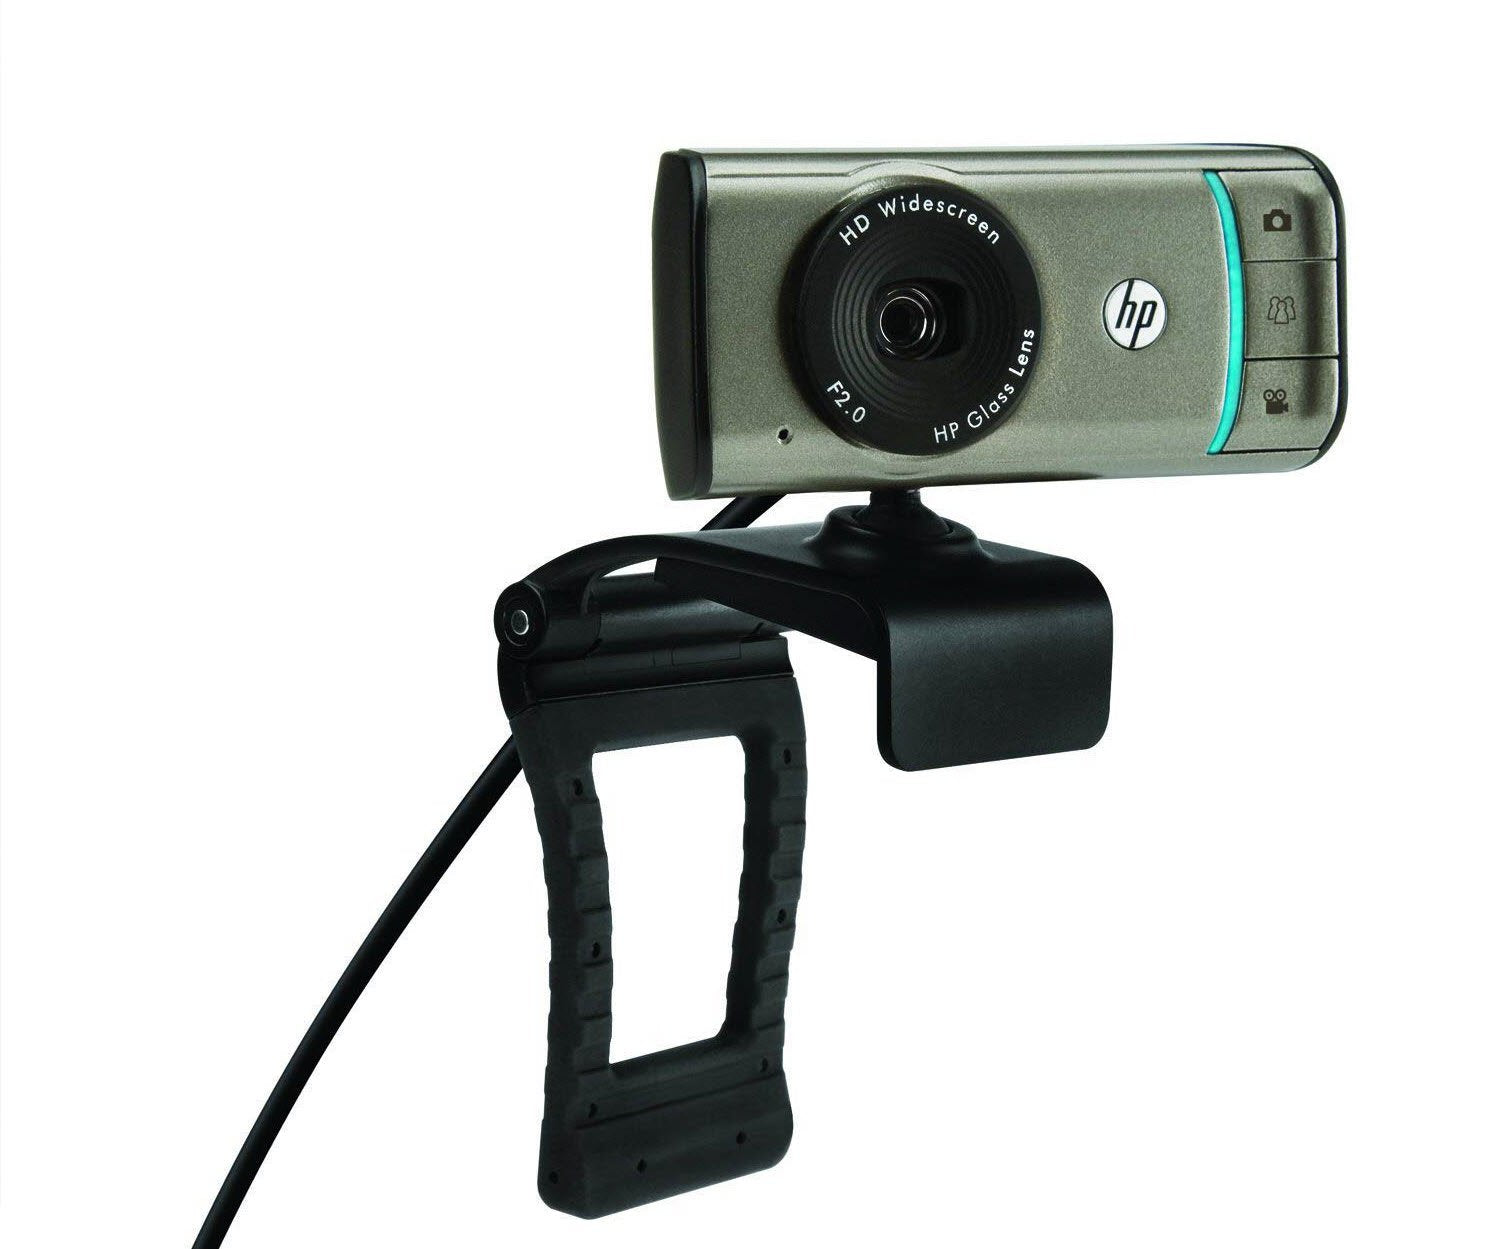 HP Webcam HD-3100-720P Widescreen Webcam with TrueVision